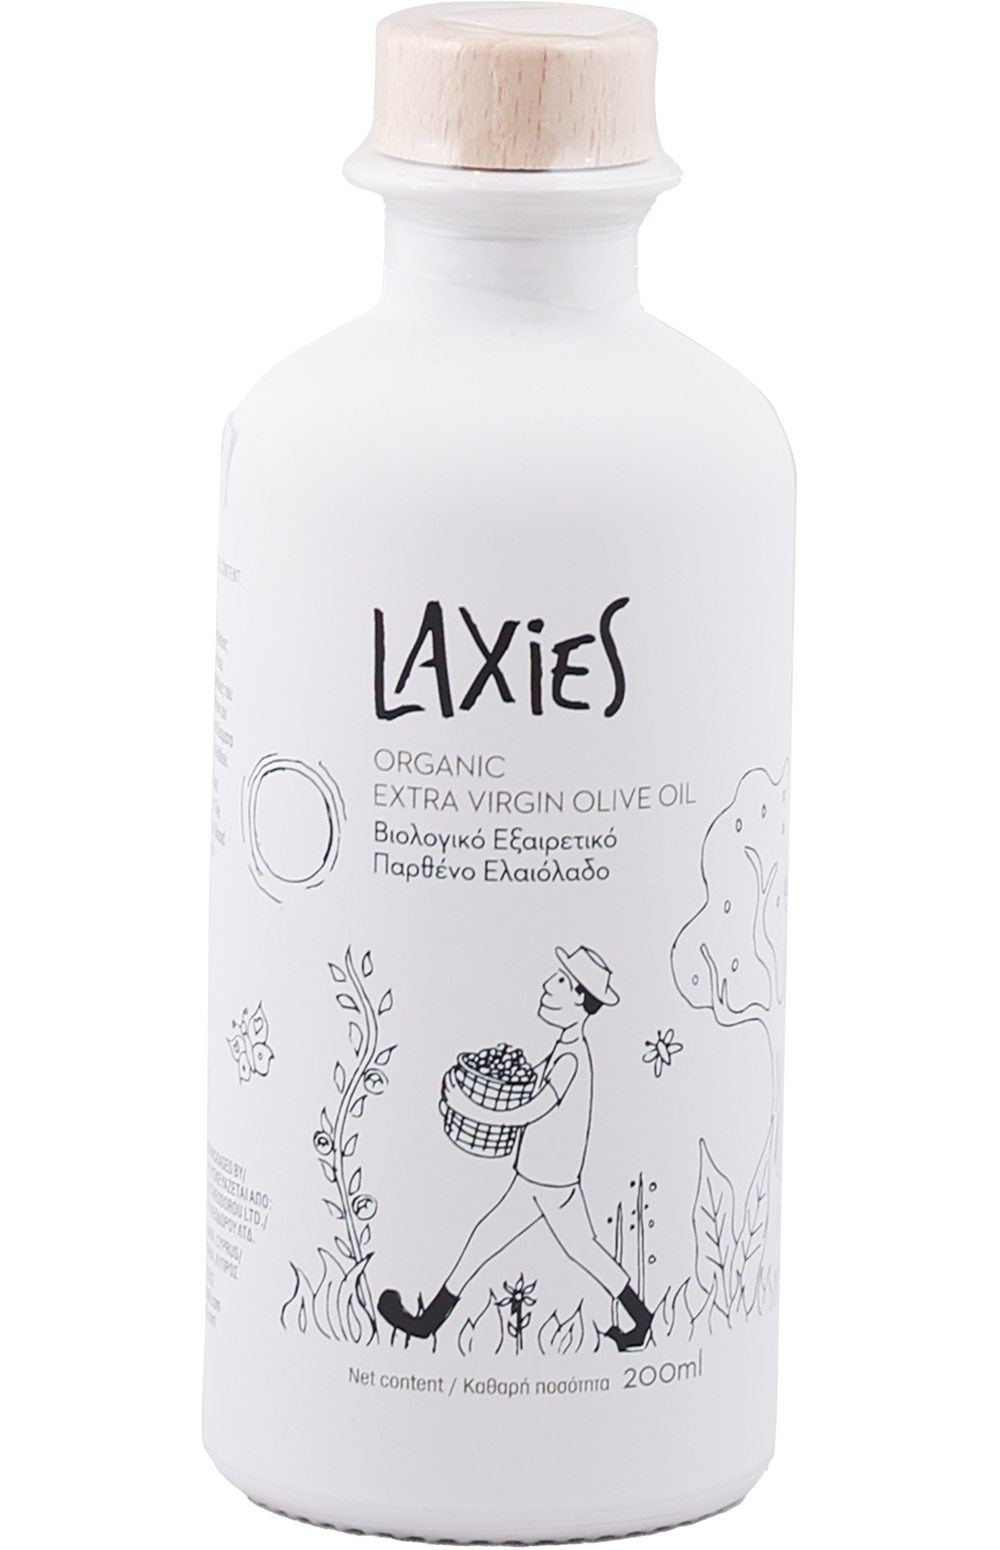 Laxies Organic Extra Virgin Olive Oil